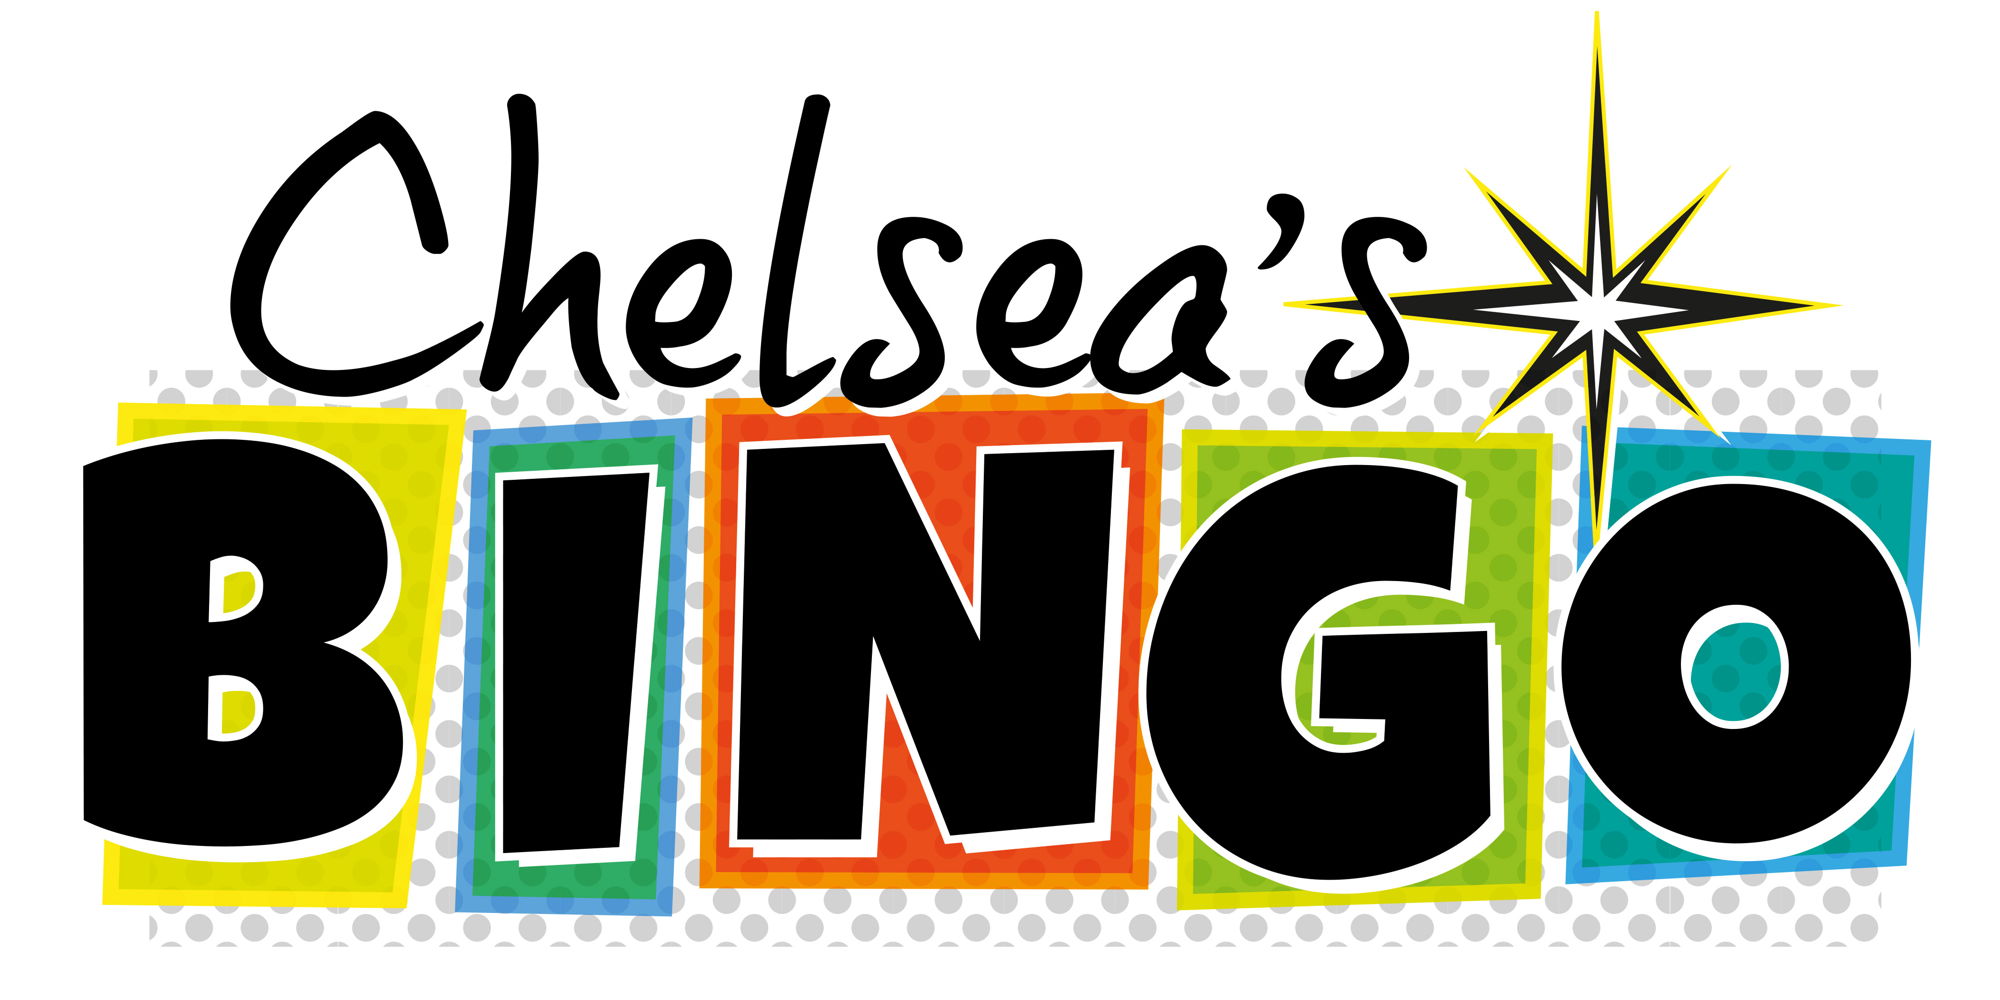 Chelsea's Bingo - Thursday Evening promotional image